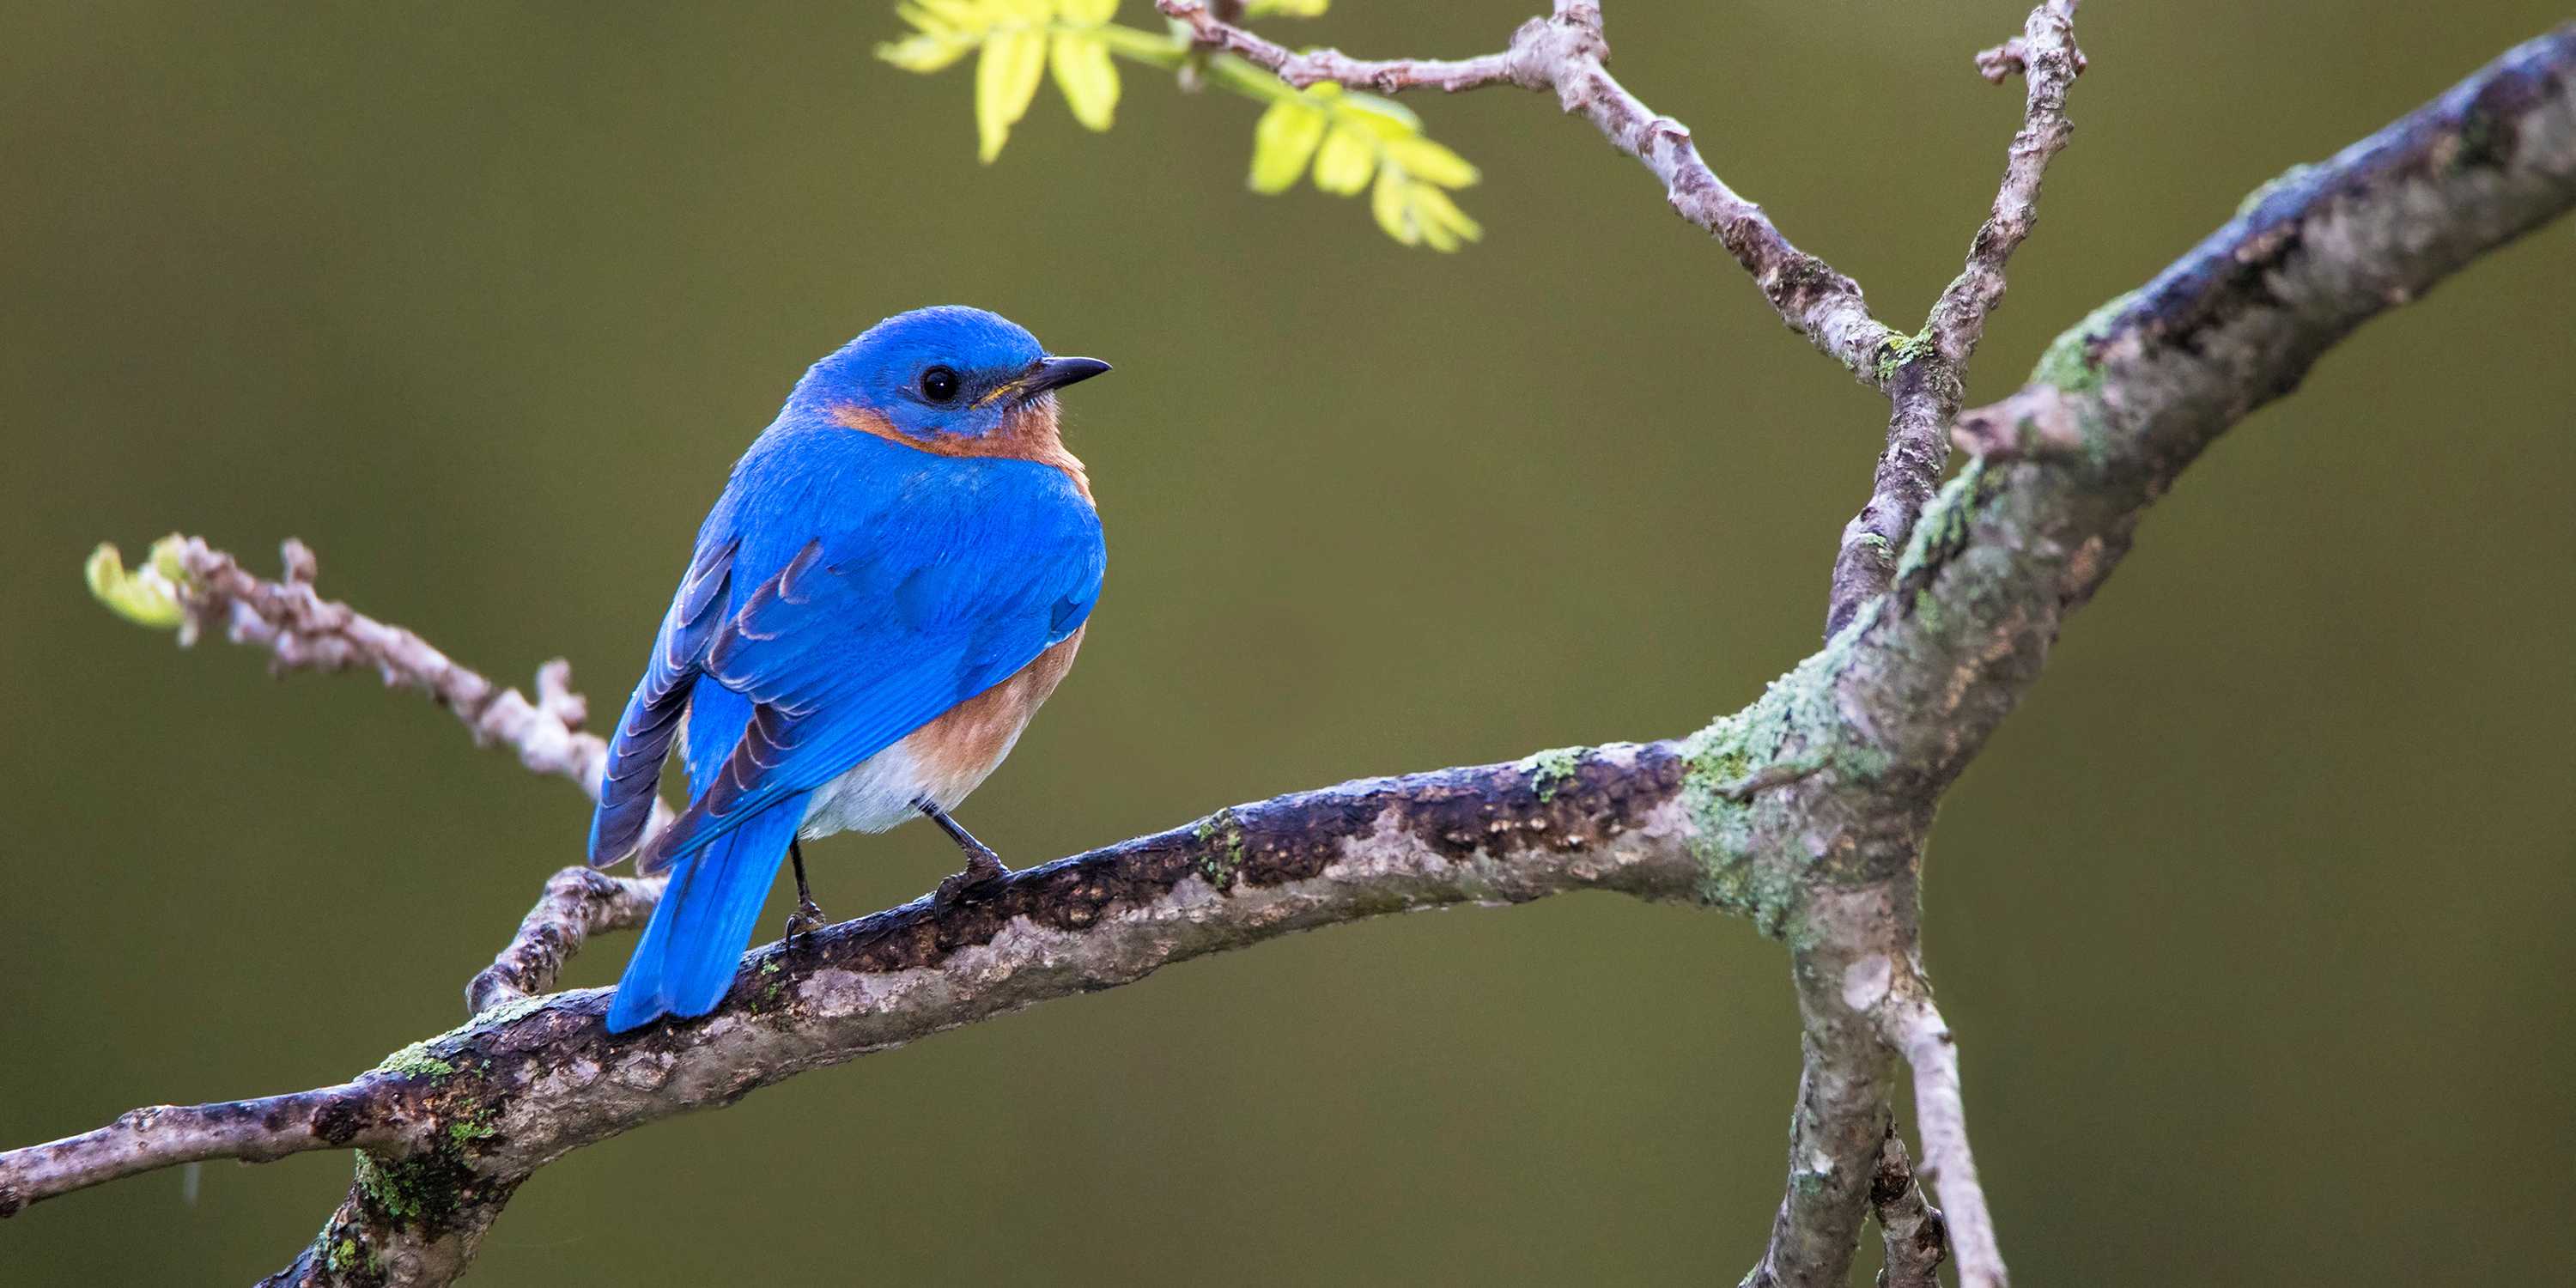 A blue bird sits on a branch.